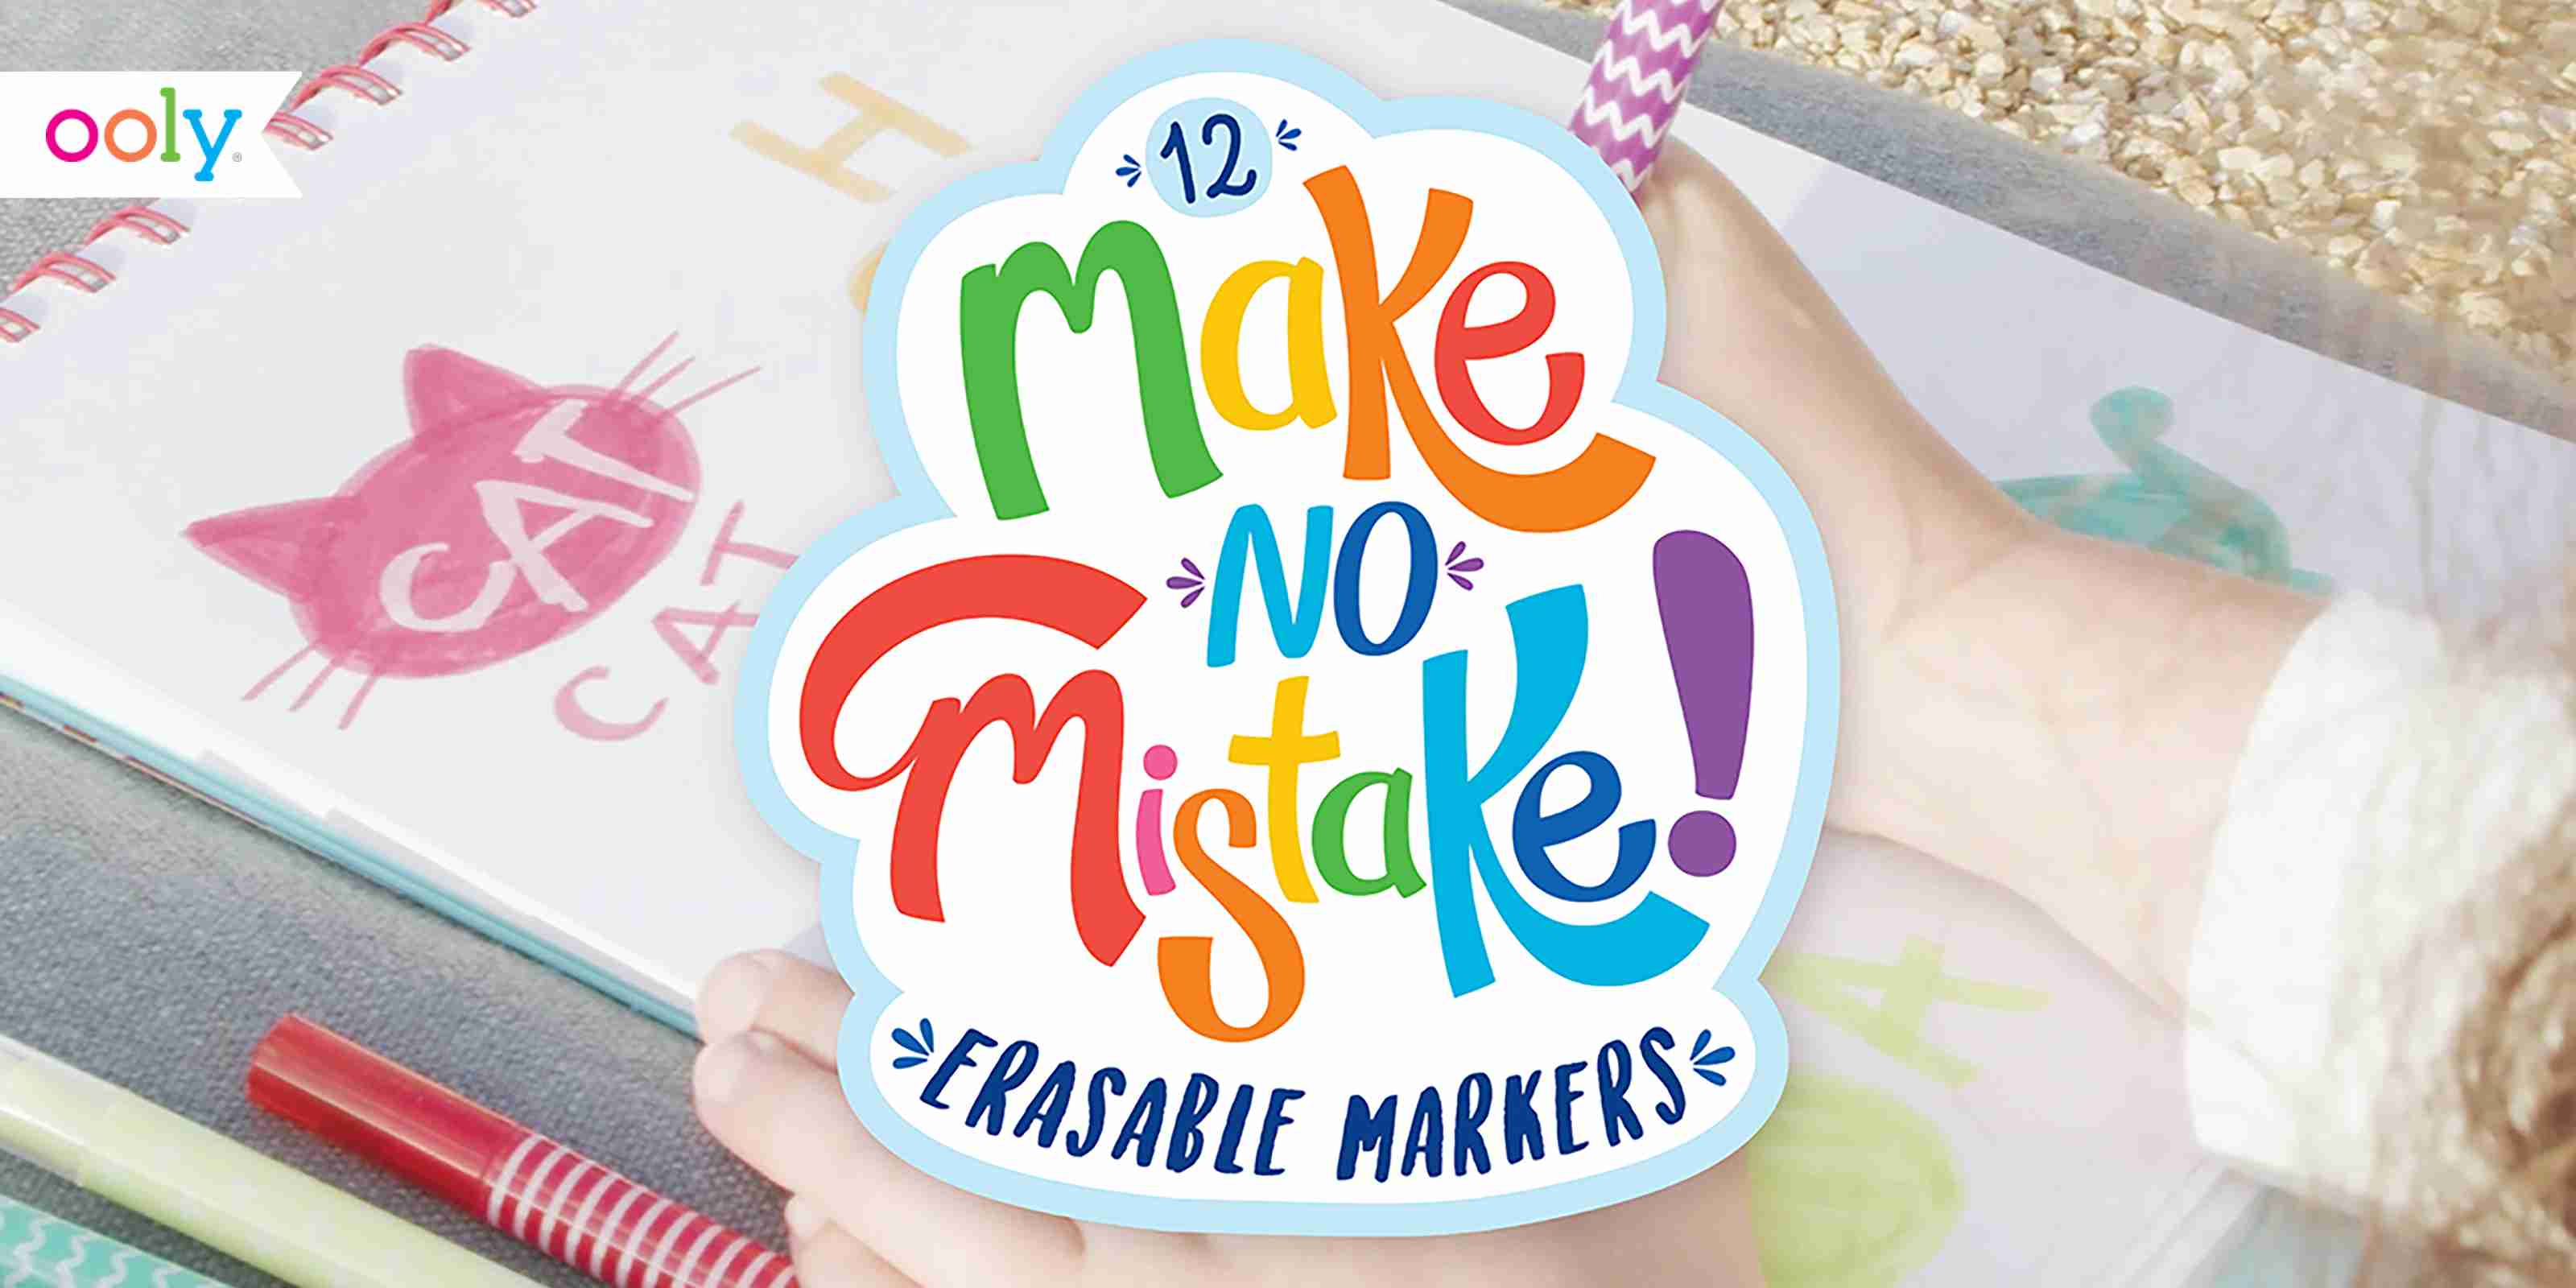 Make no mistake erasable markers